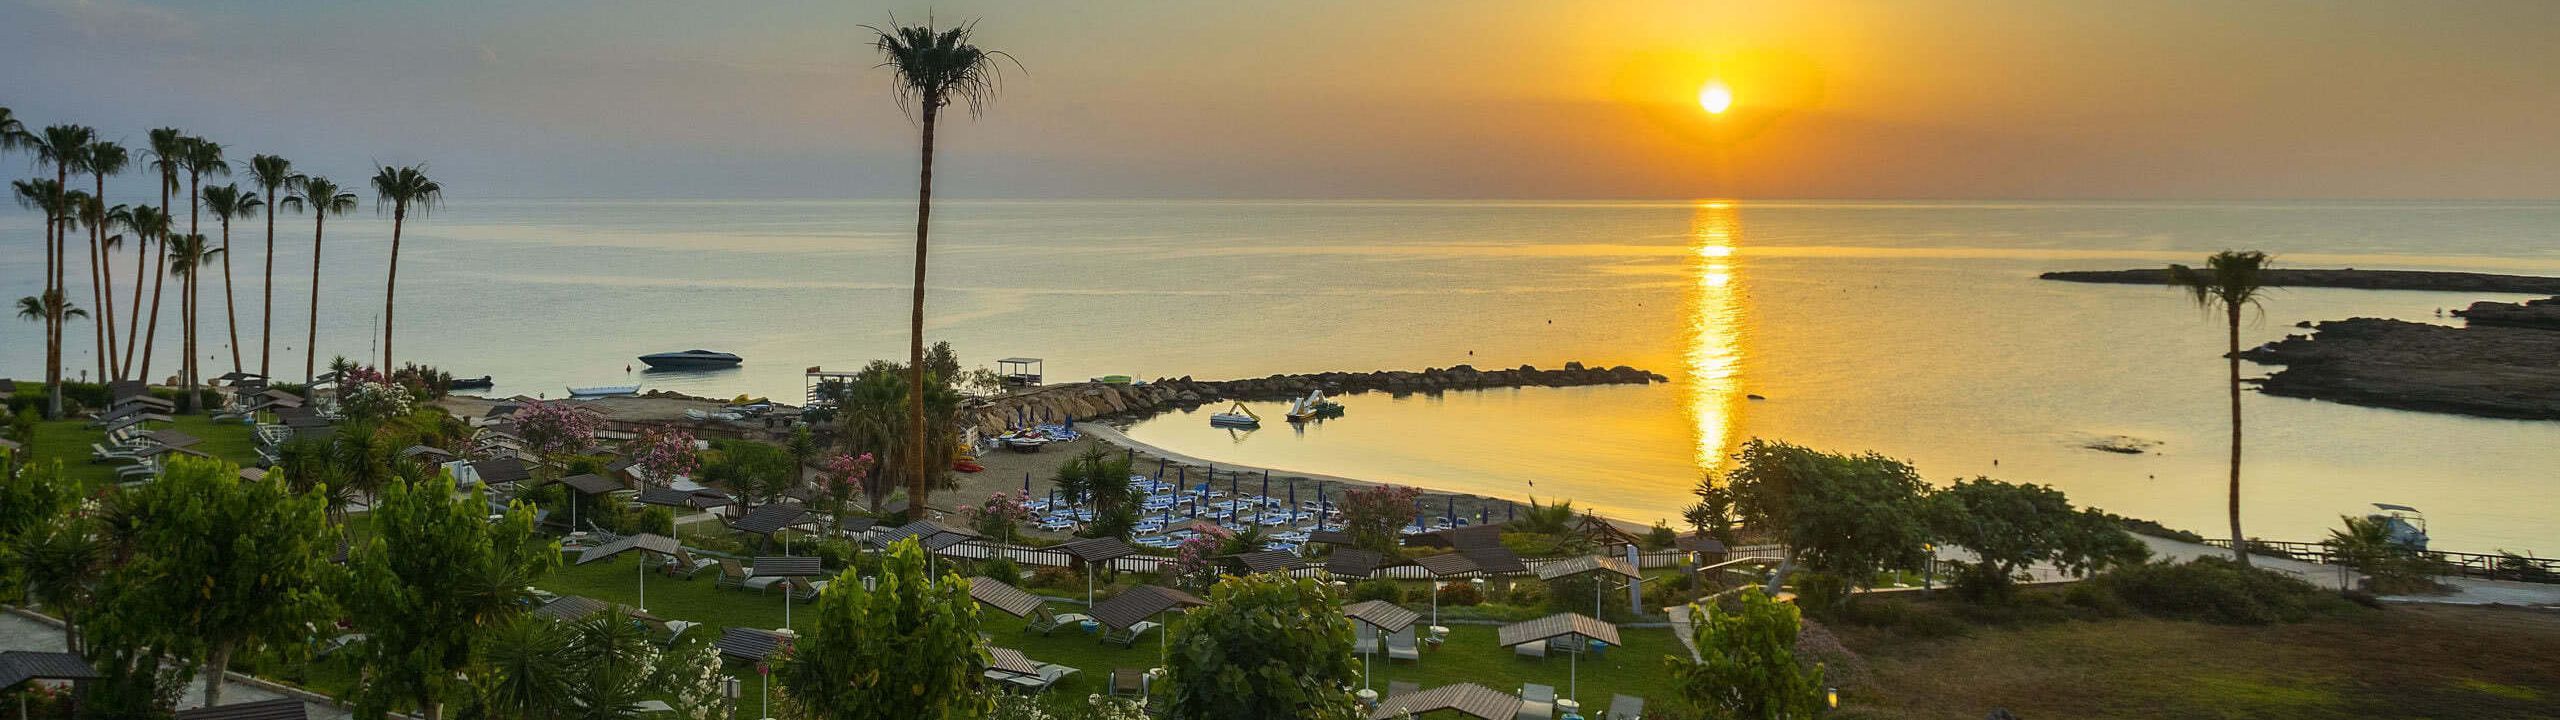 Cavo Maris Beach Hotel in Protaras Cyprus